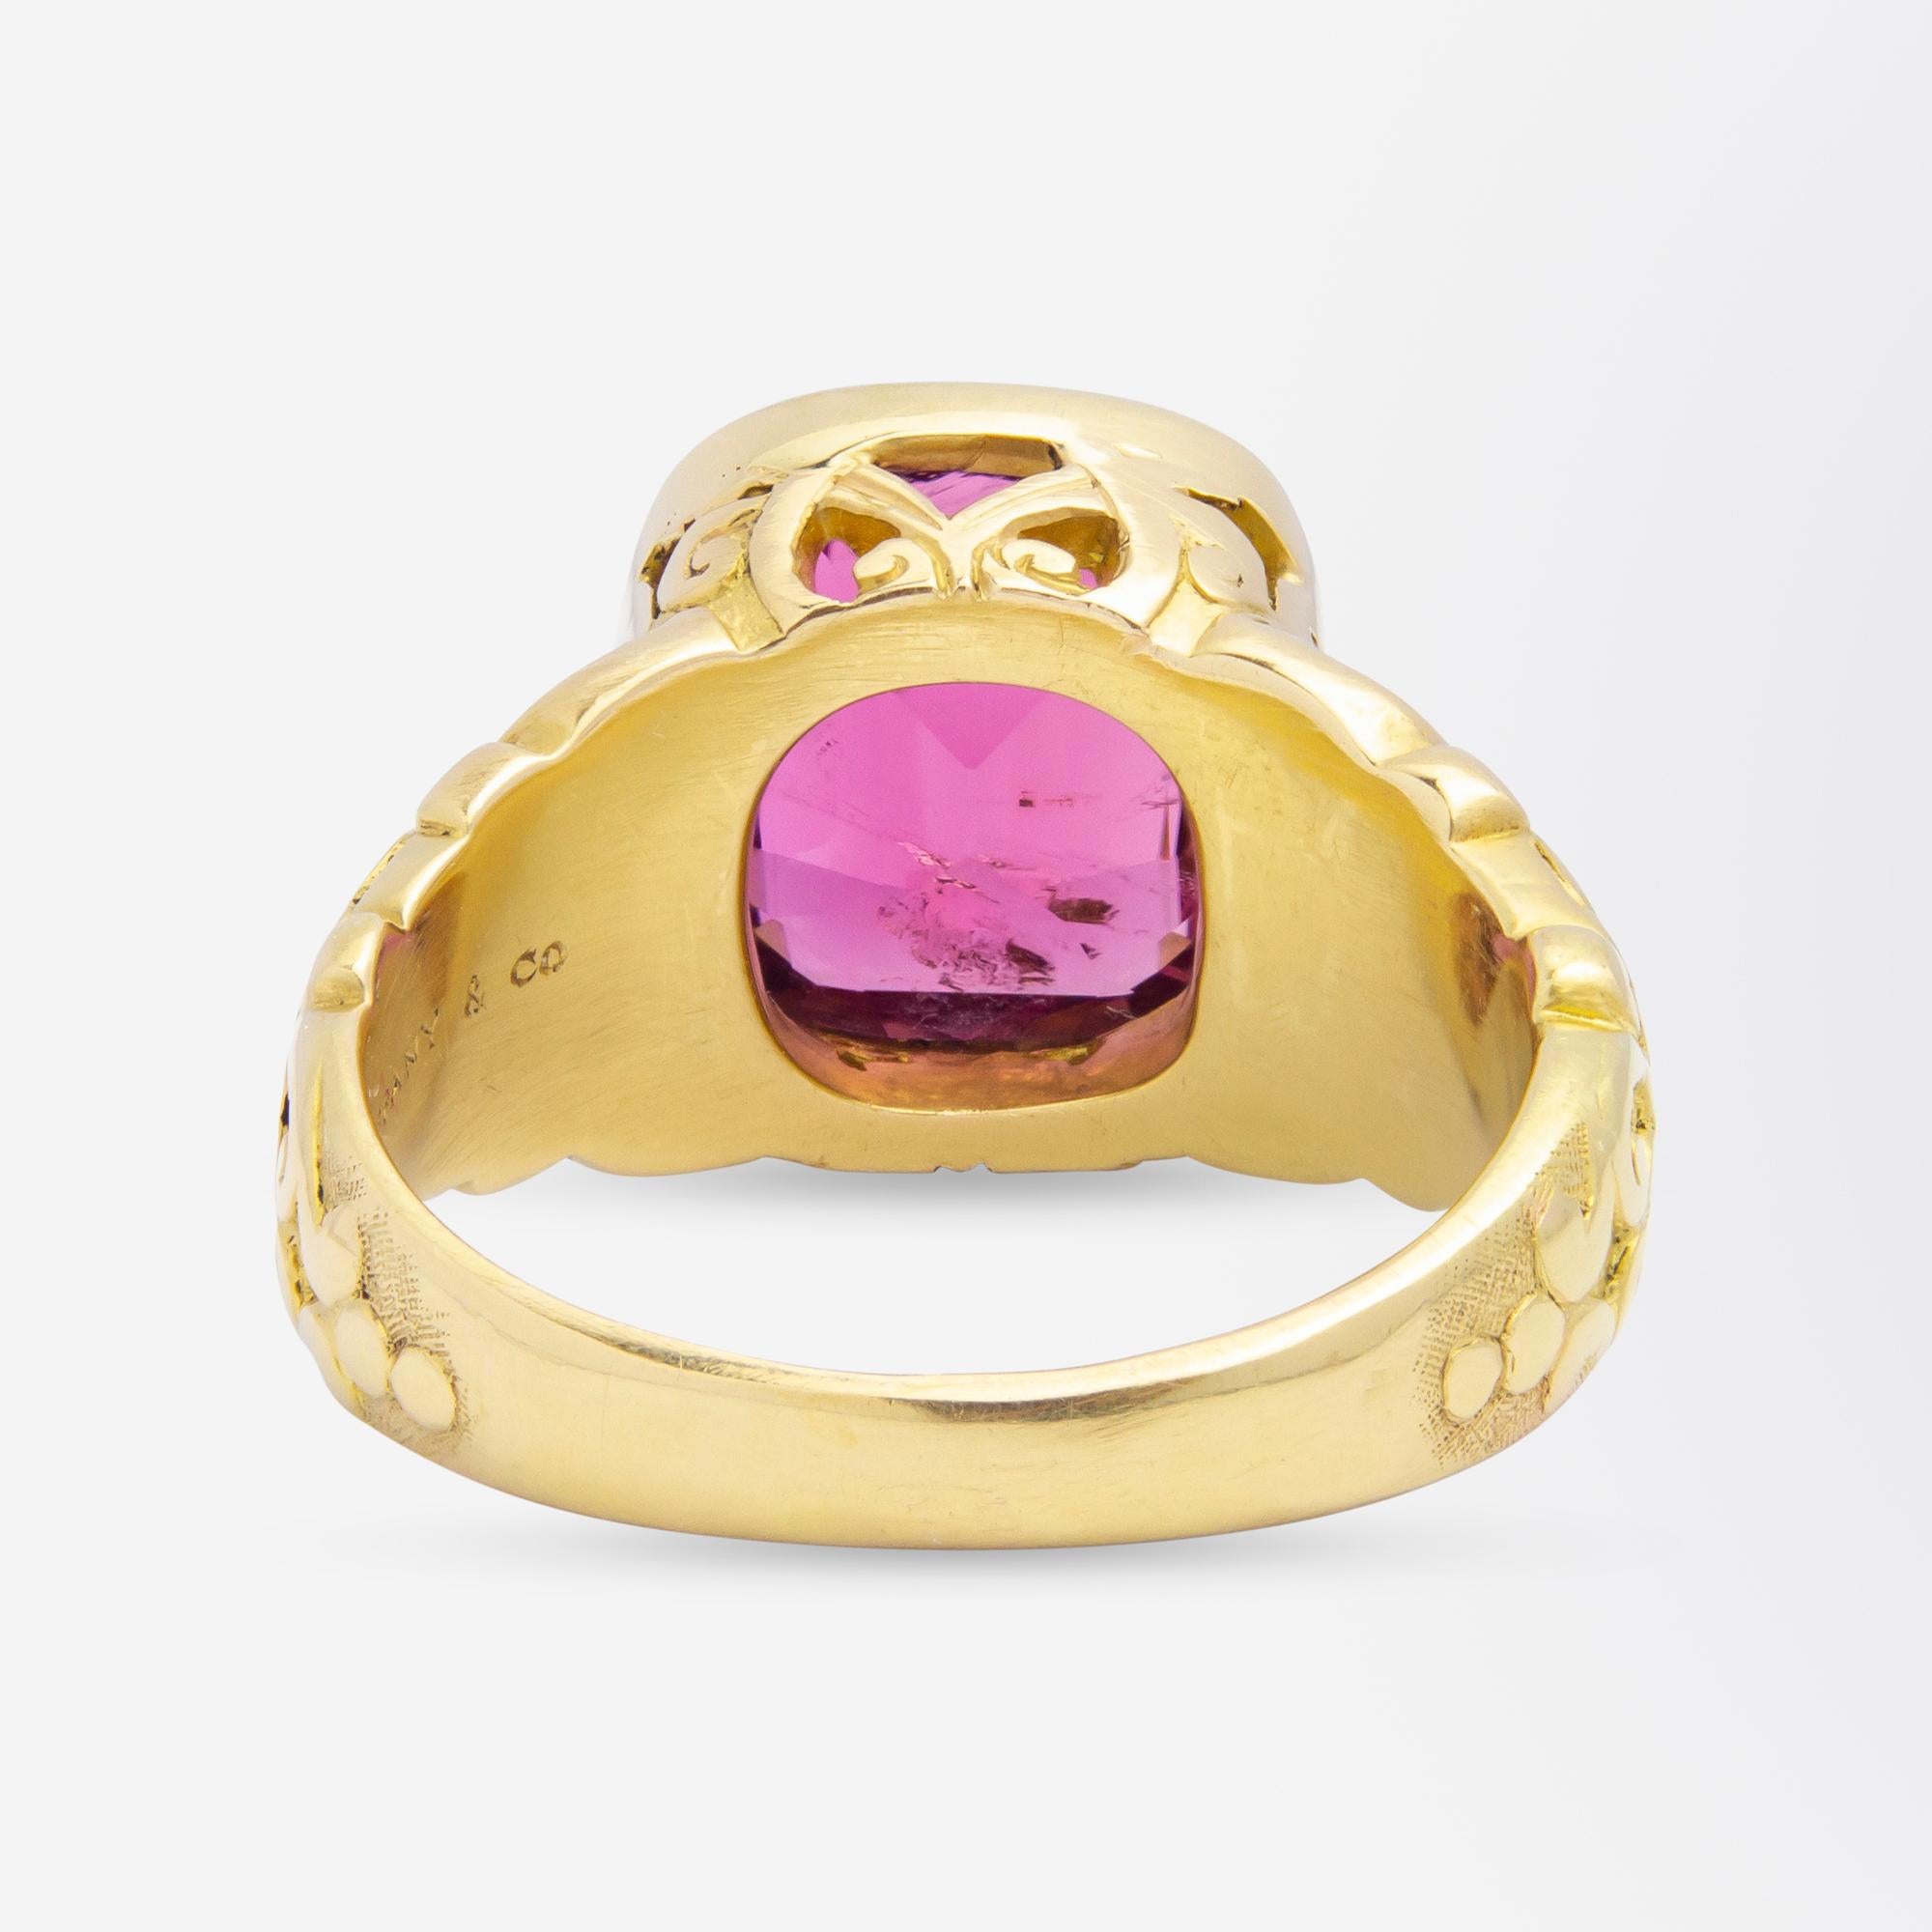 Women's or Men's Art Nouveau, 18 Karat Yellow Gold 'Rubellite Tourmaline' Ring by Tiffany & Co.